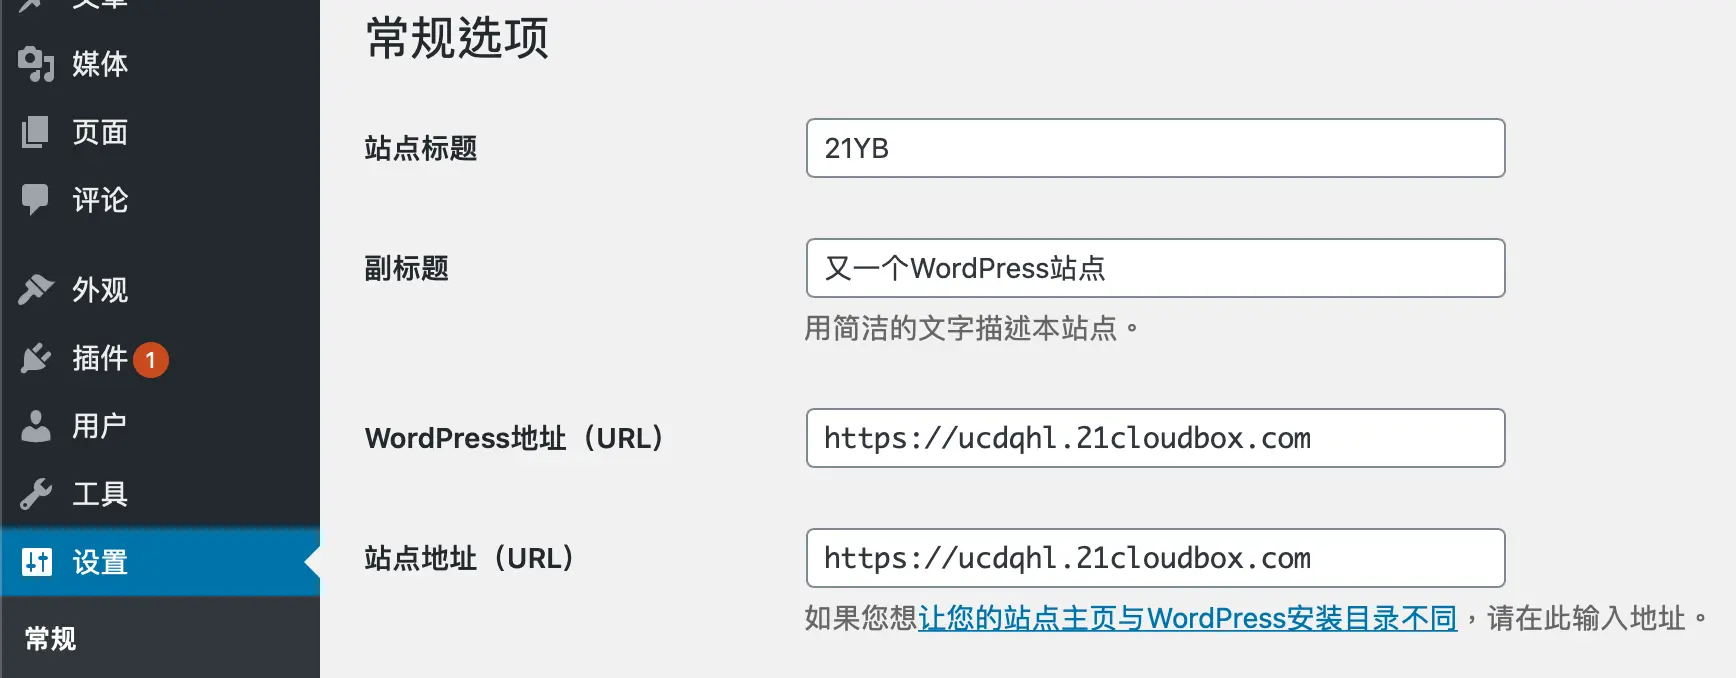 Configure a custom domain name for WordPress